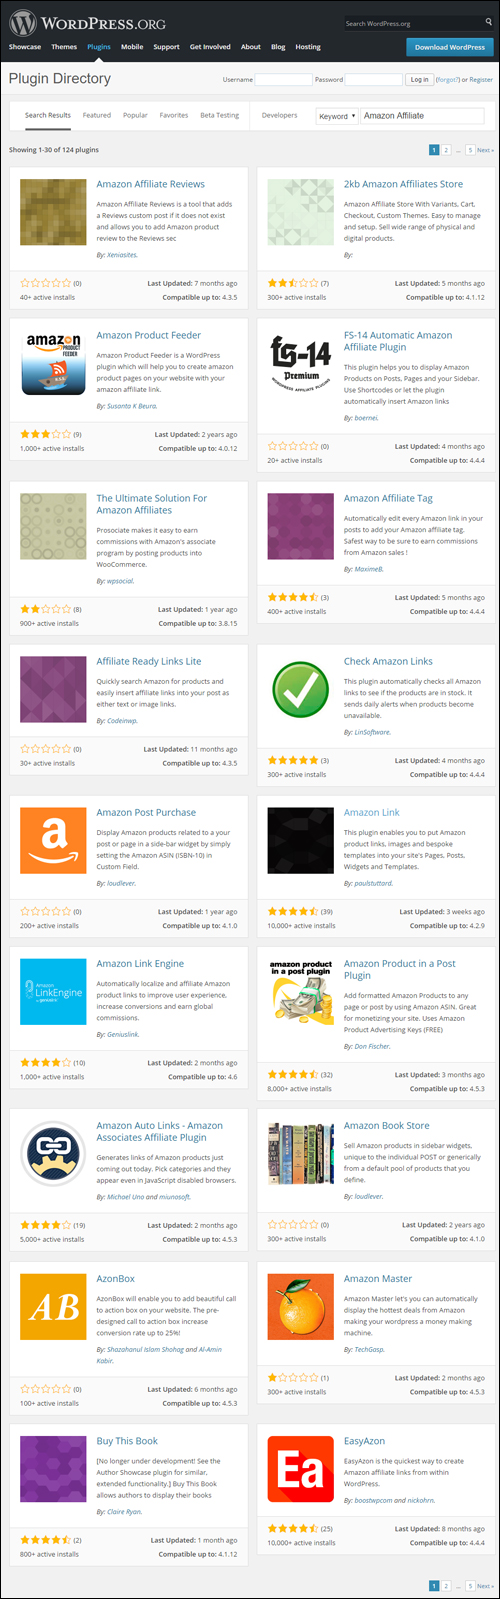 WordPress Plugins - Amazon Affiliate